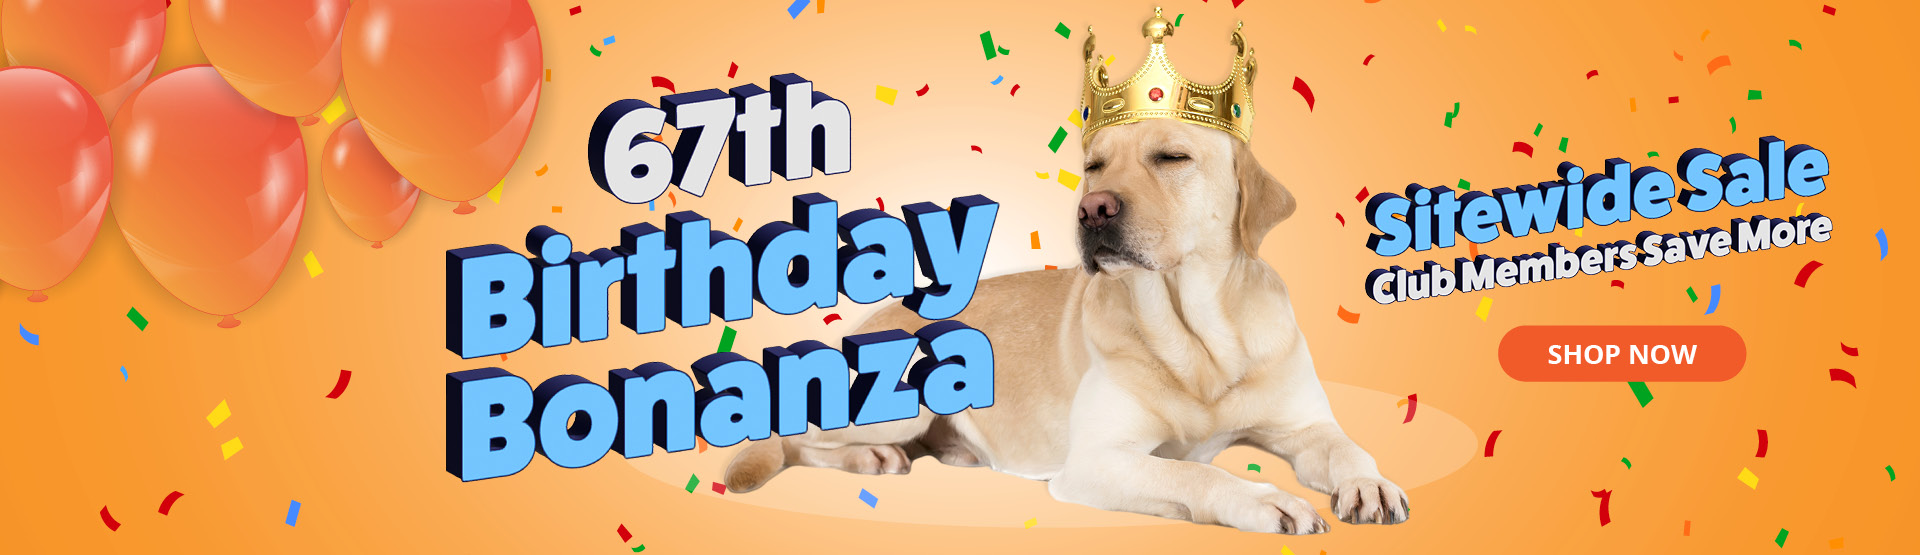 67th Birthday Bonanza sitewide sale